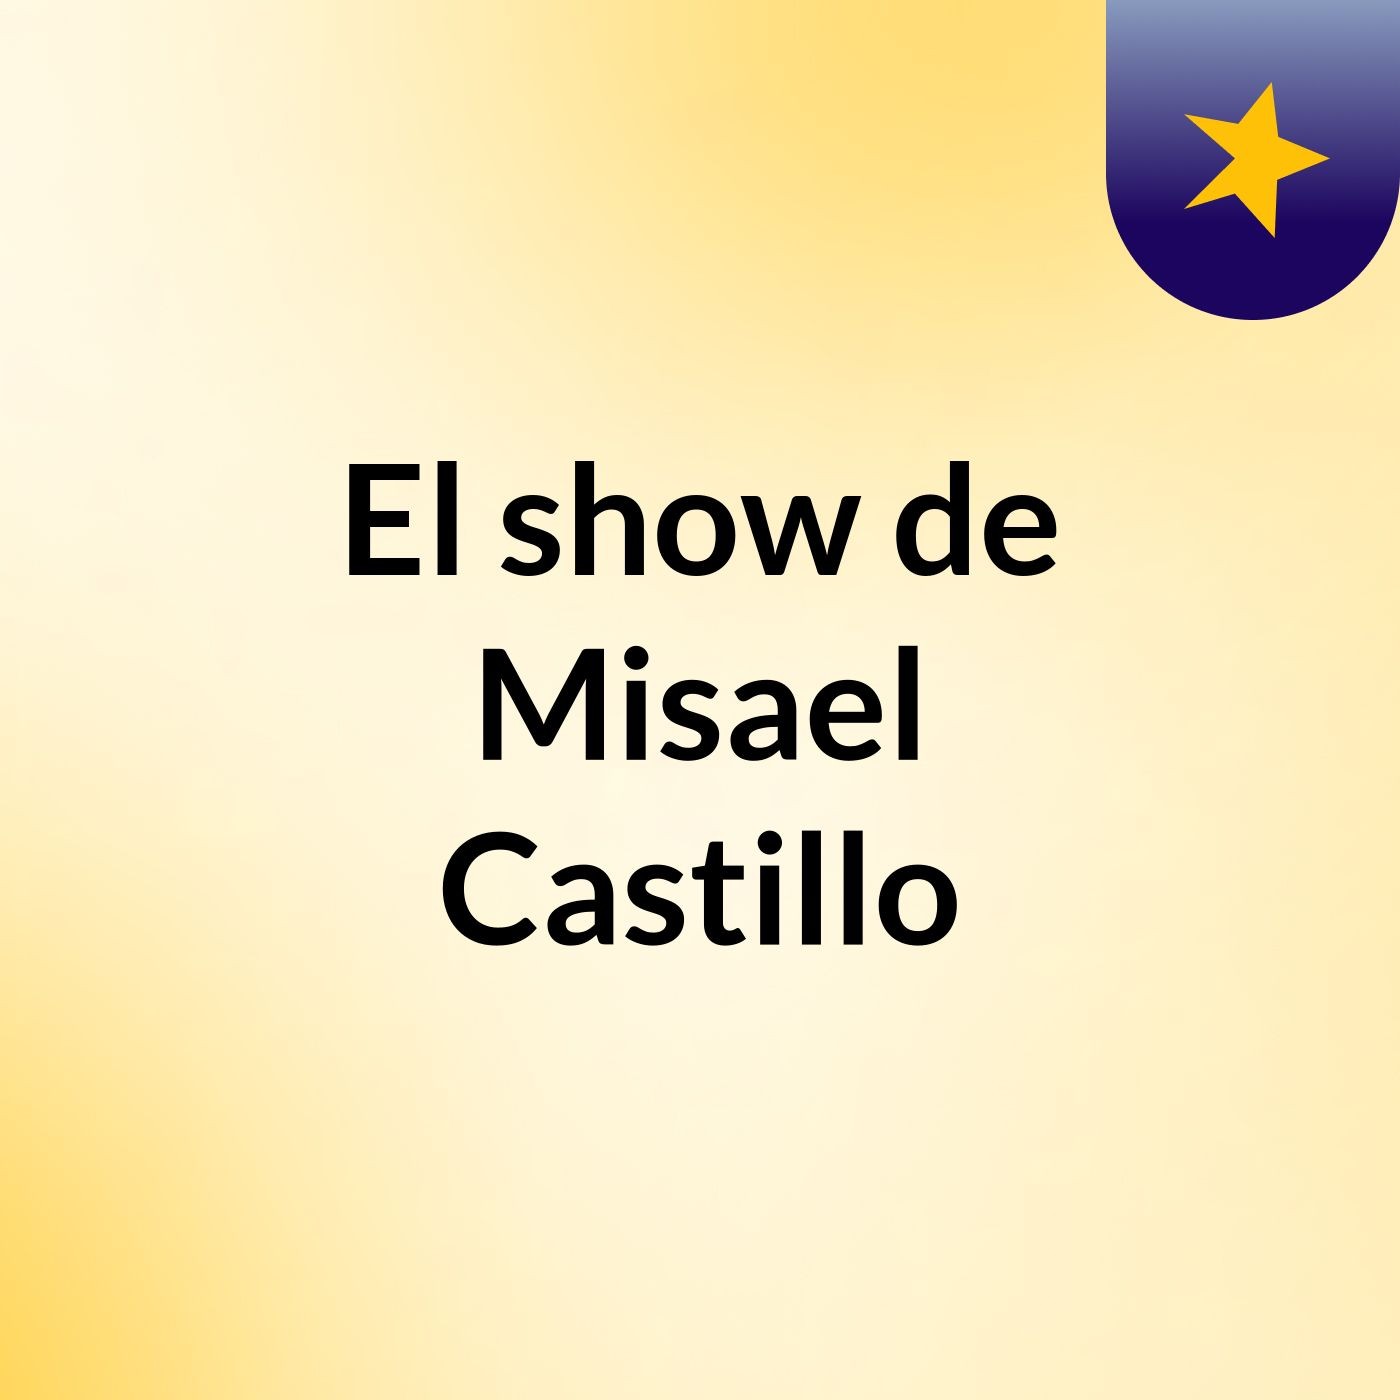 El show de Misael Castillo